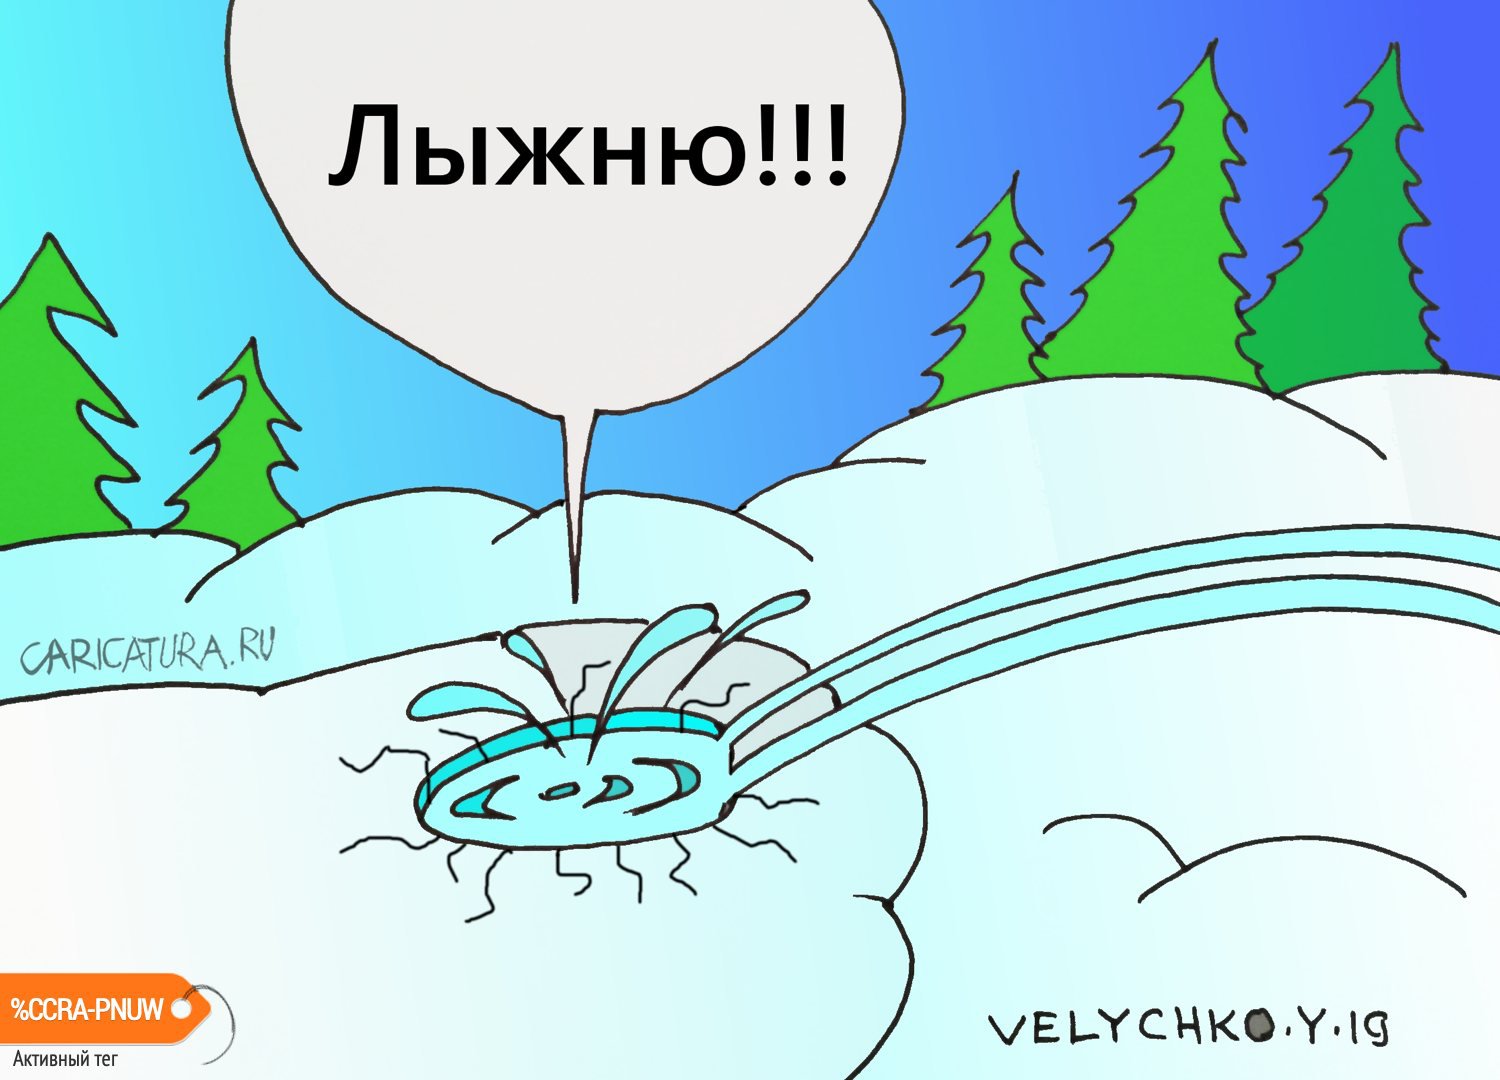 Карикатура "Лыжню", Юрий Величко